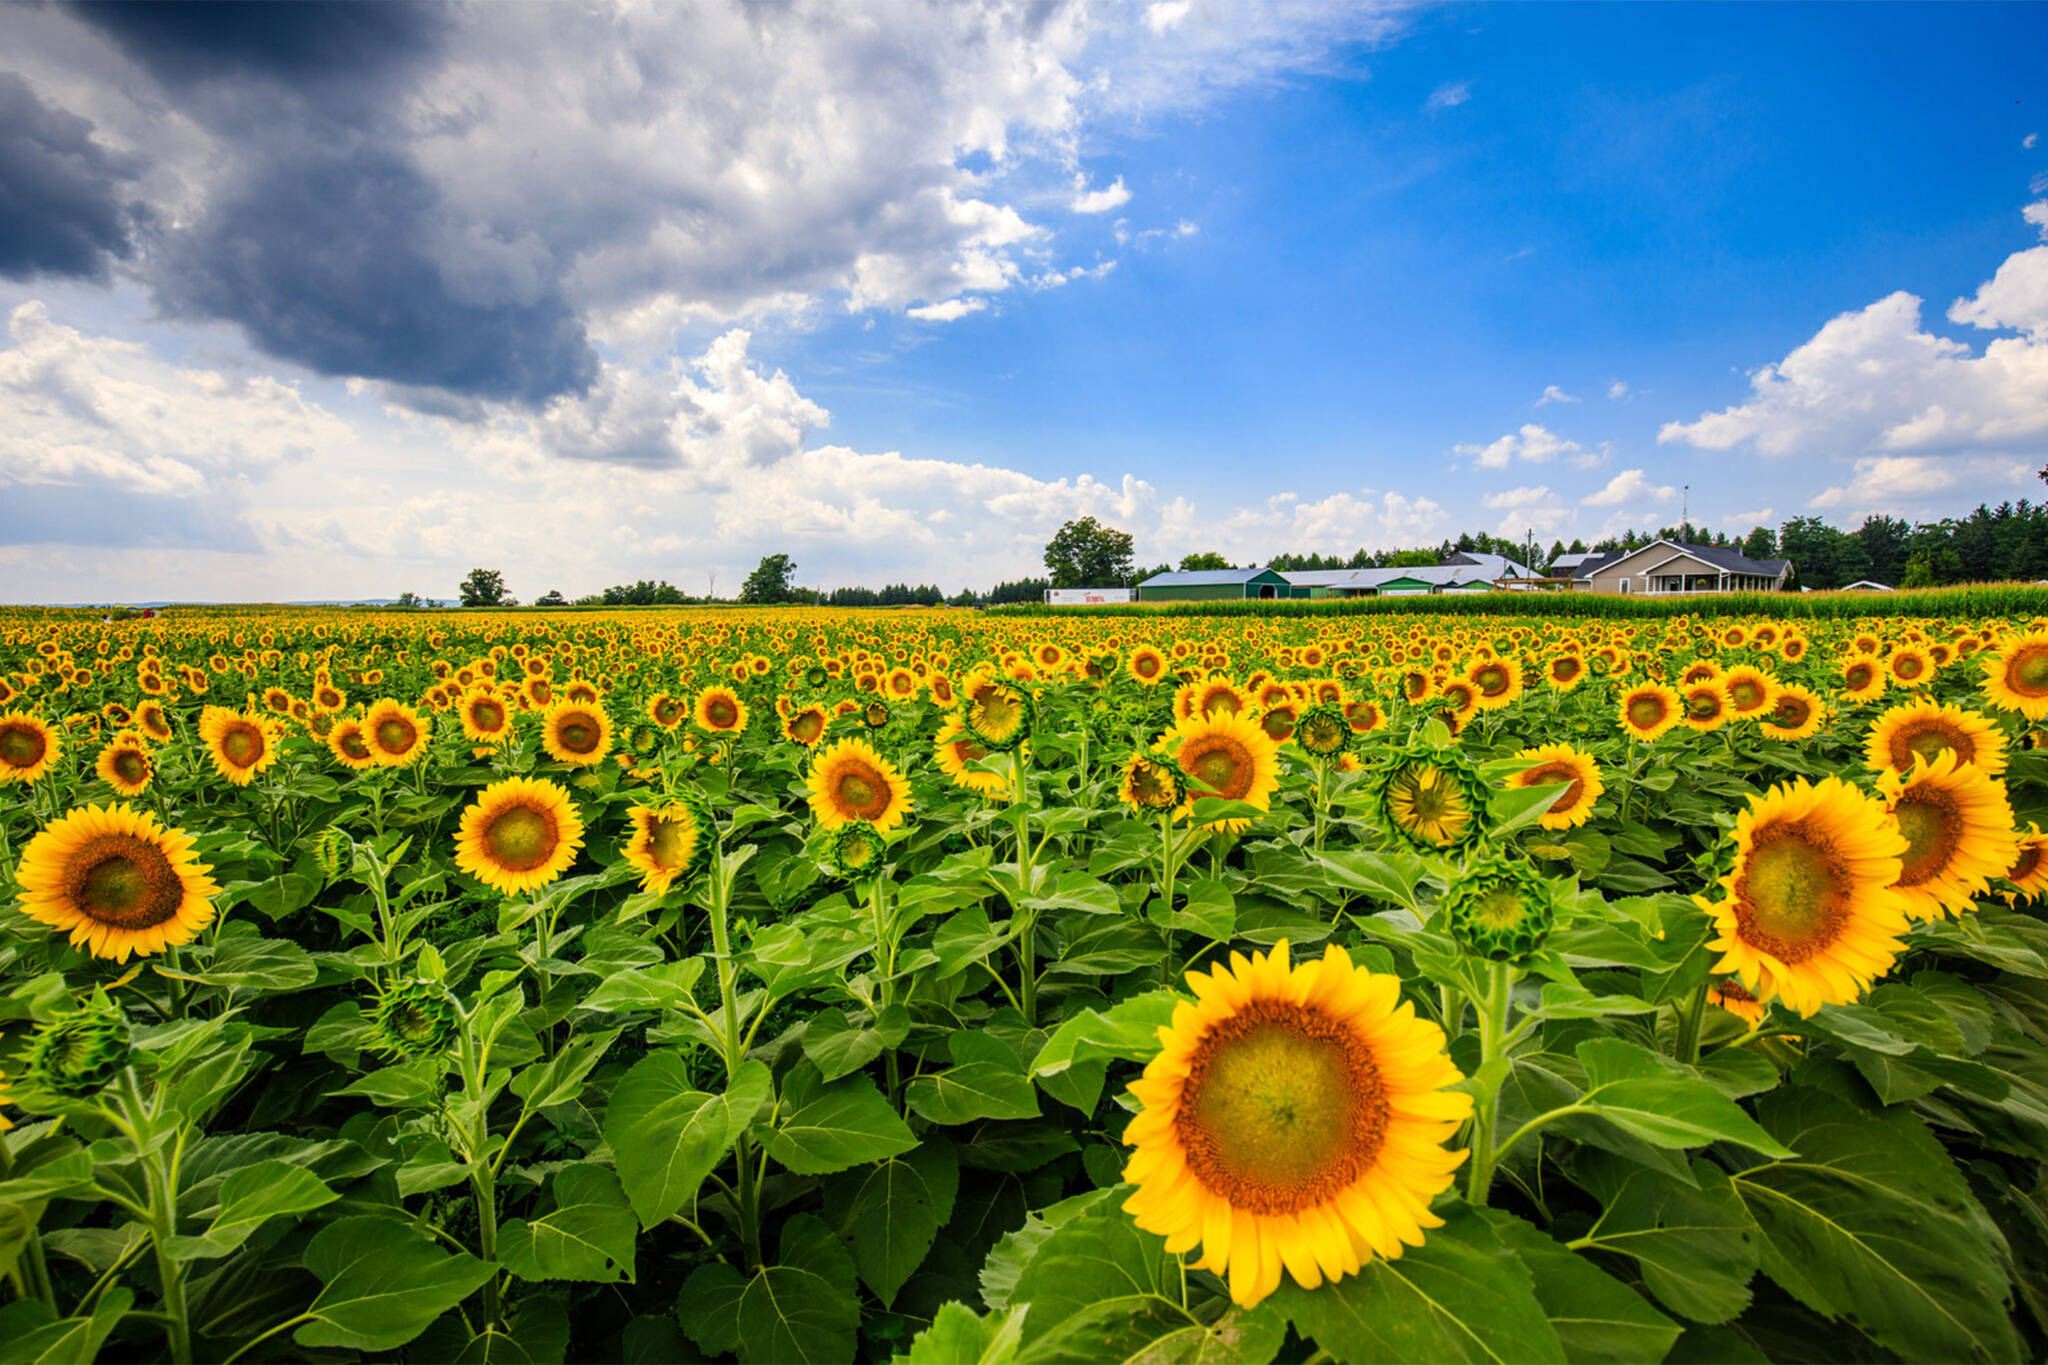 sunflower farm toronto